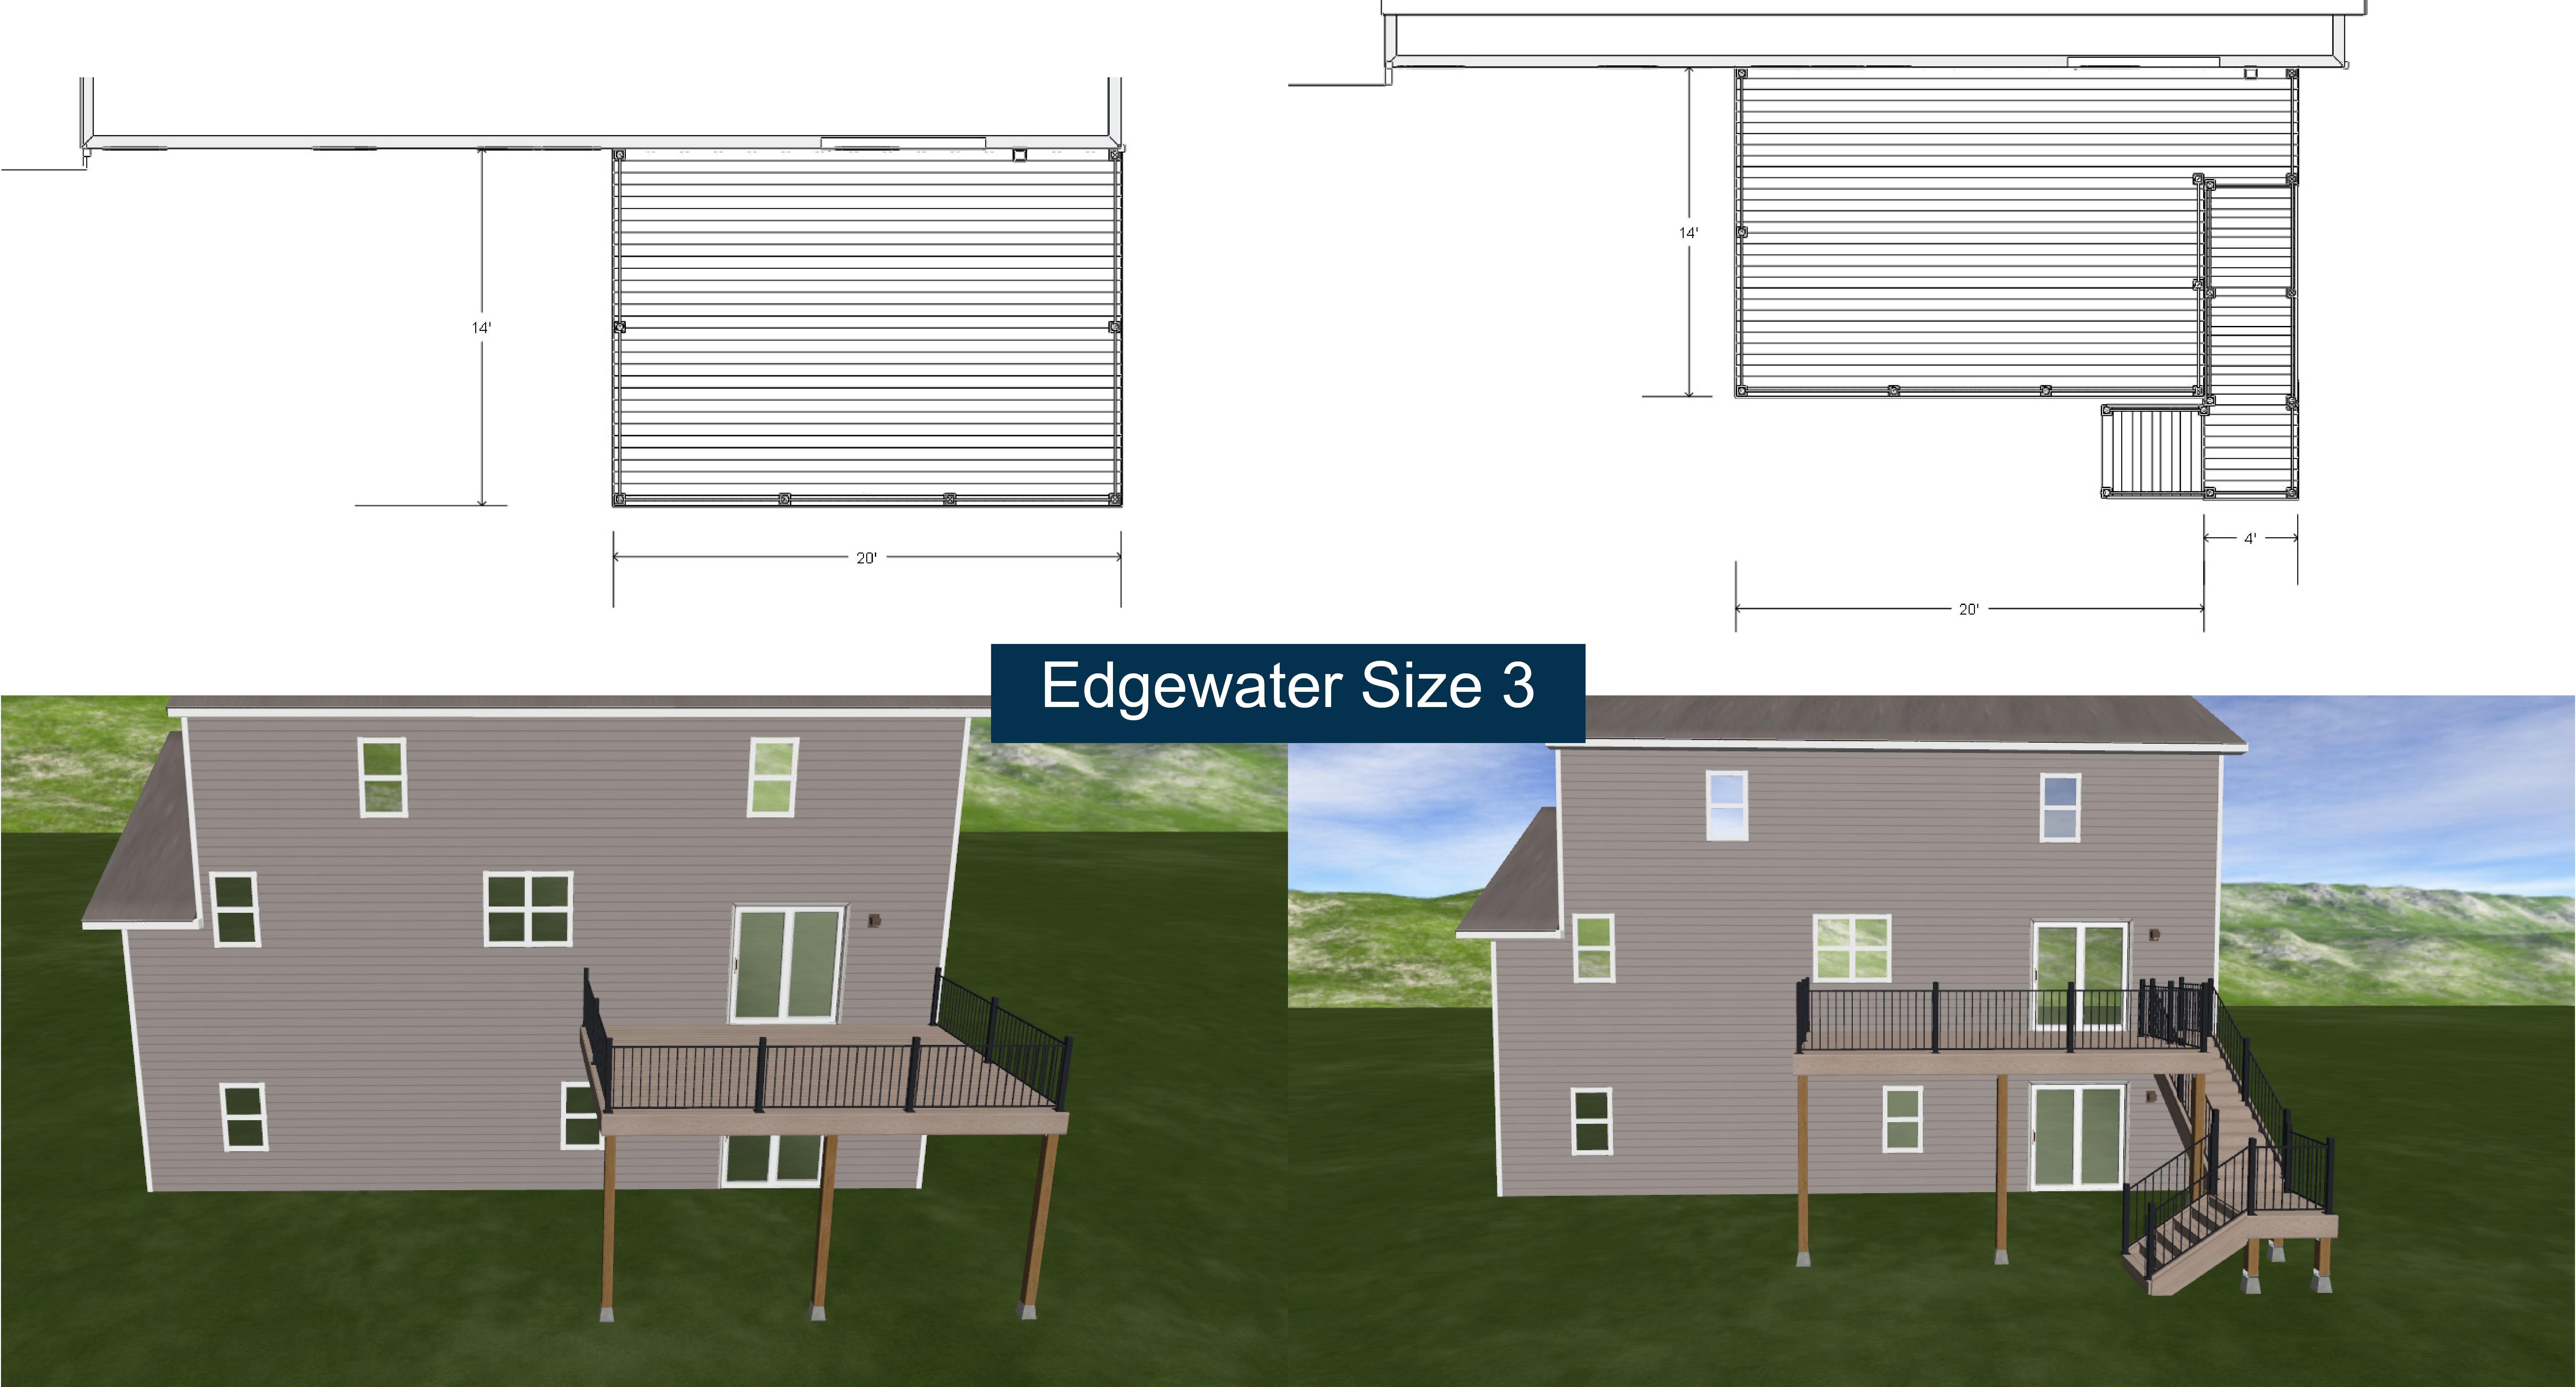 CWeb Edgewater Size 3